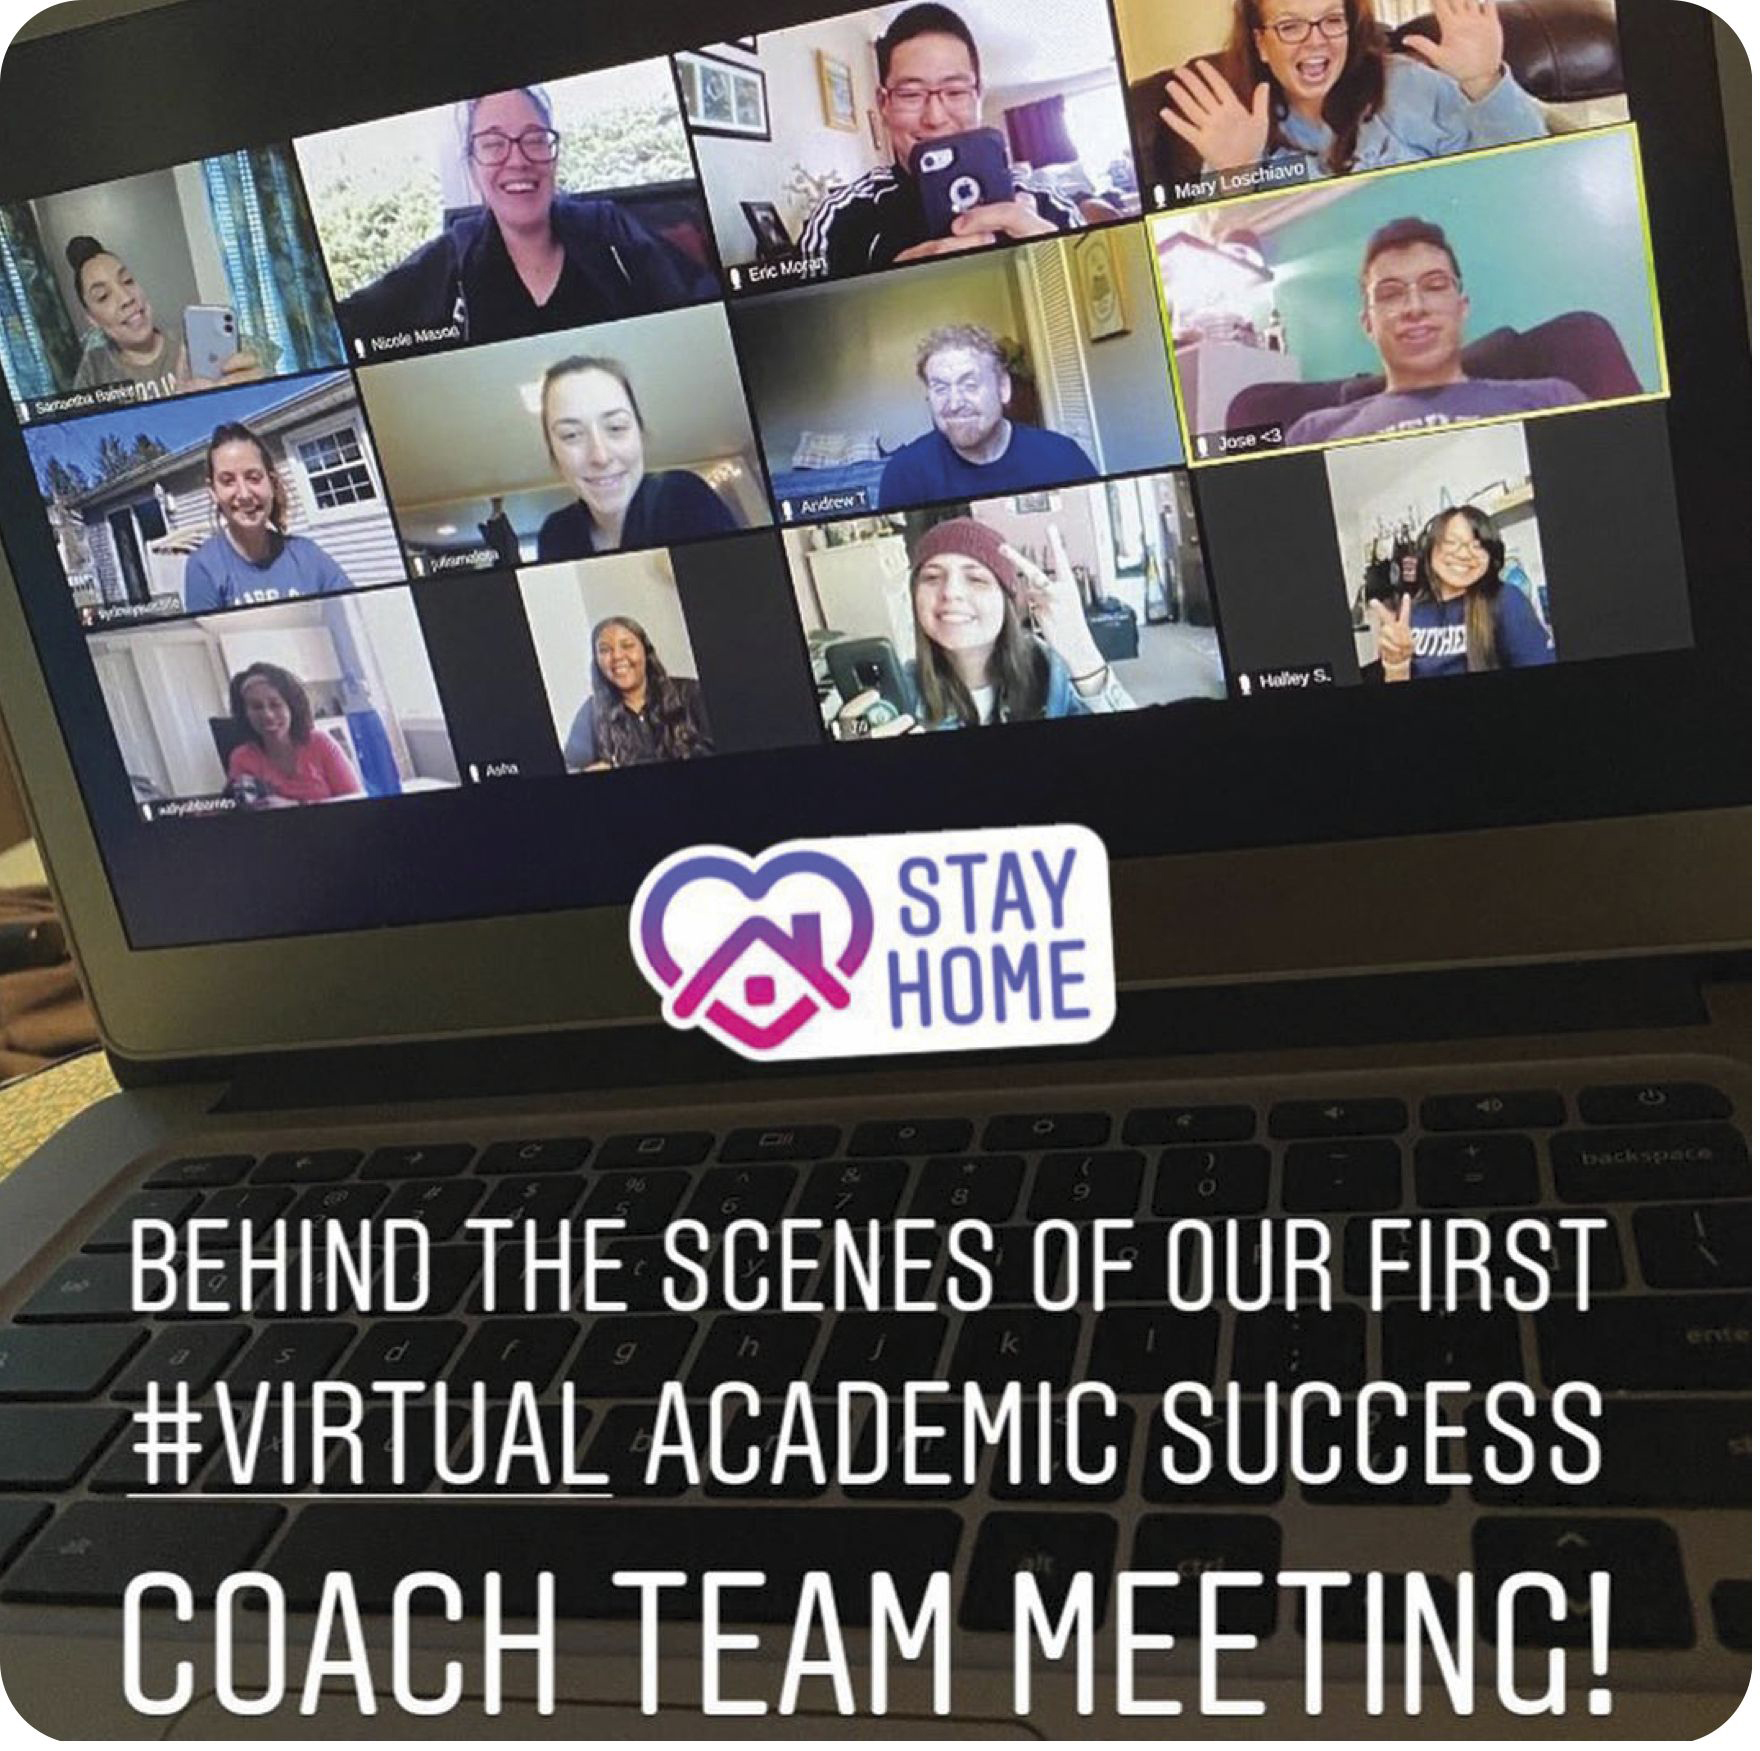 SCSU Academic Success Center has Coach Team Meeting online